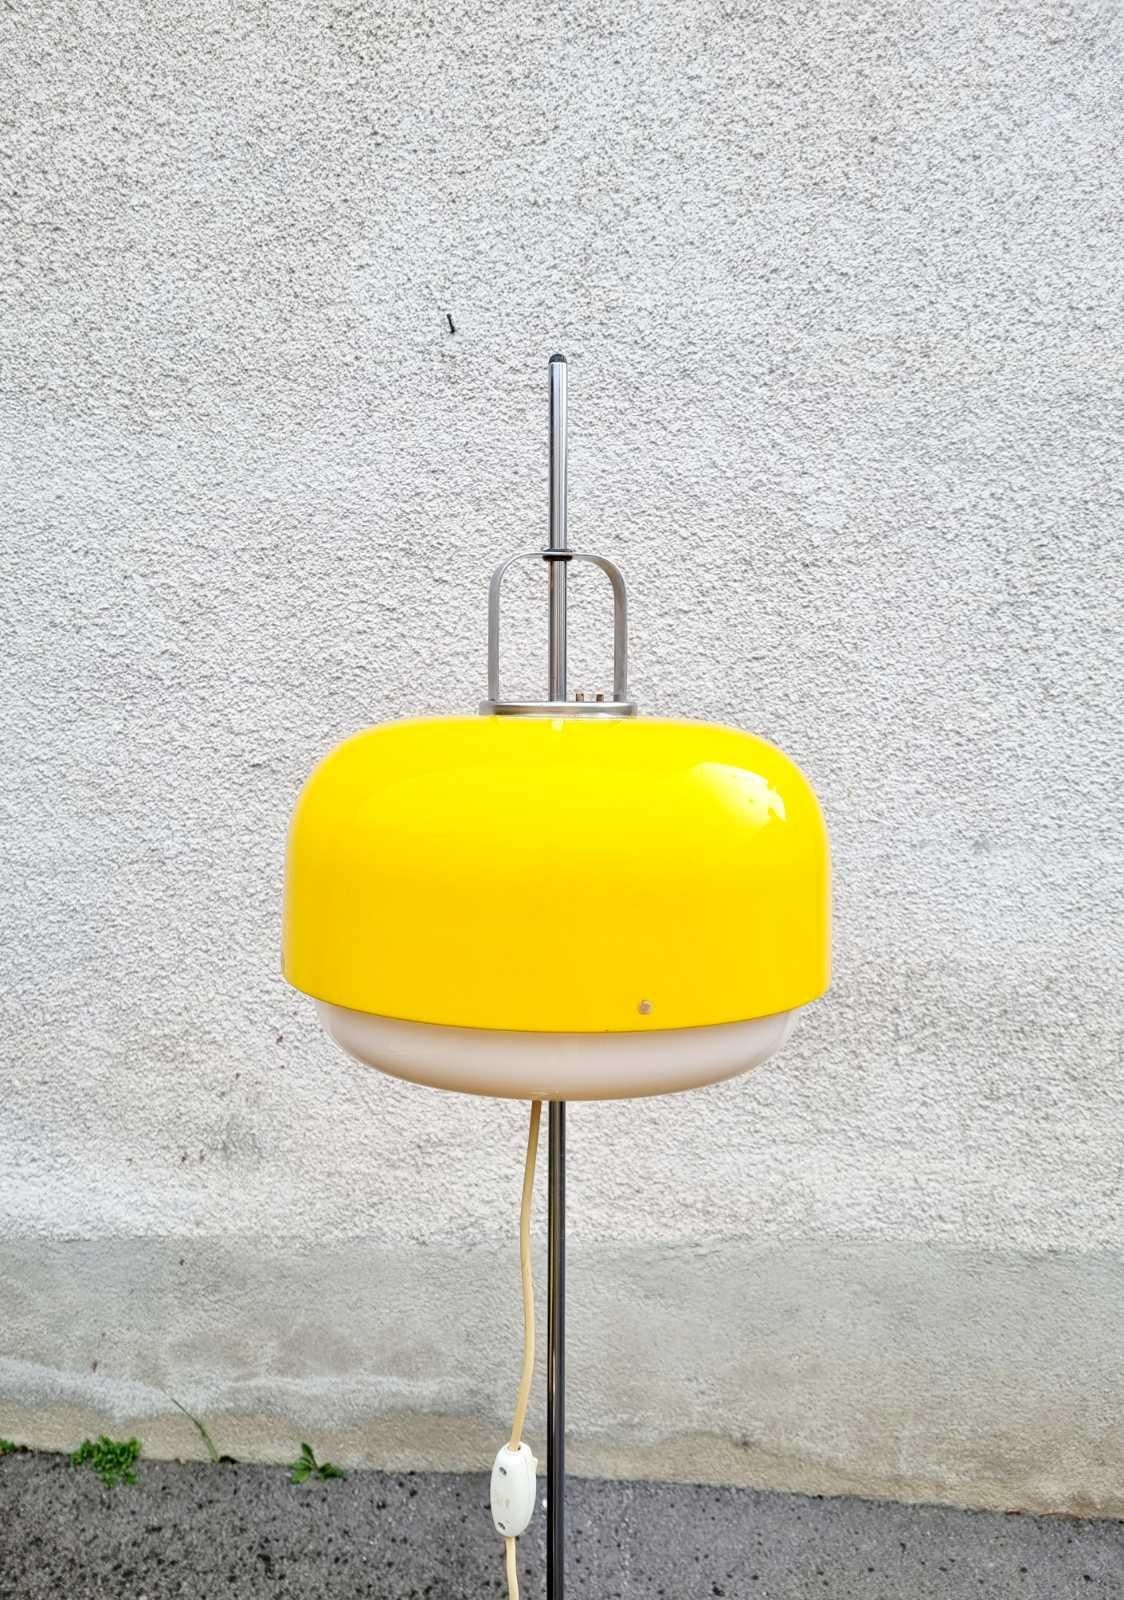 Rare yellow floor lamp Medusa, designed by Luigi Massoni for Guzzini

in perfect vintage conditions